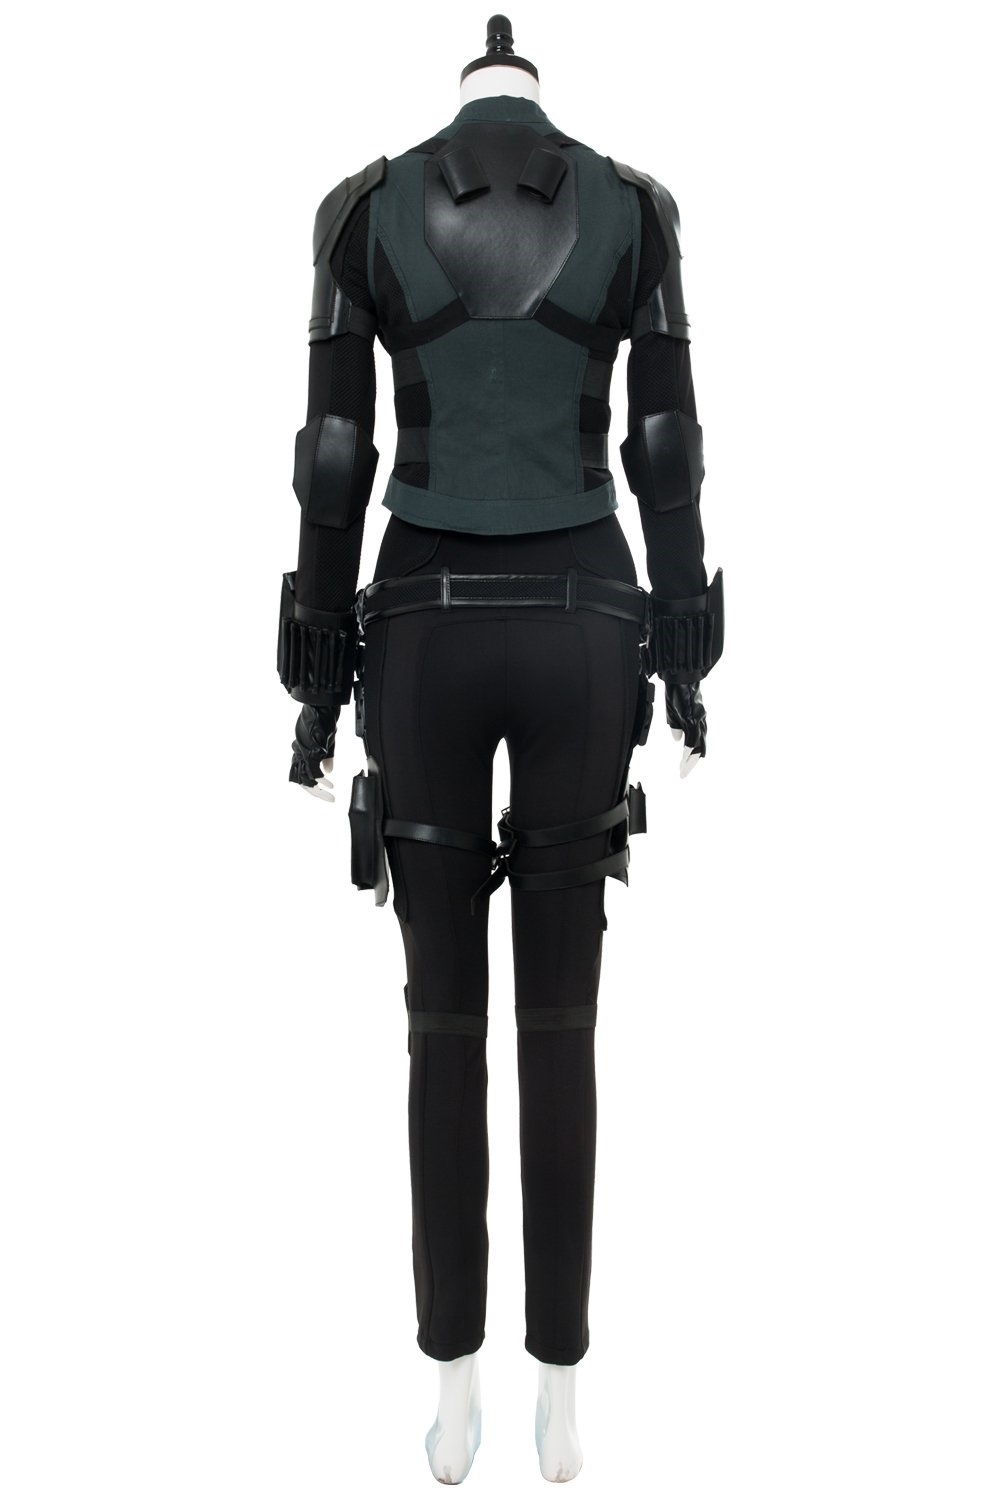 Avengers 3 Infinity War Black Widow Natasha Romanoff Outfit Cosplay Costume Whole Set